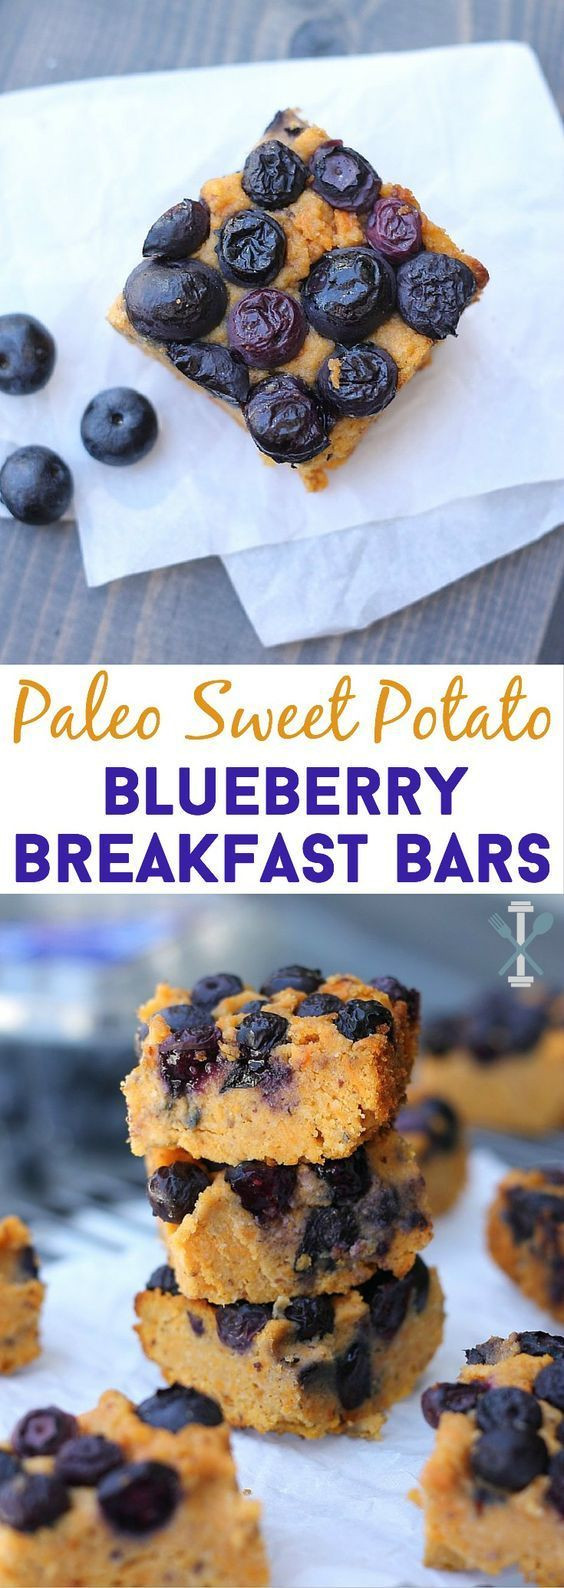 Paleo Breakfast Bar Recipe
 Paleo Sweet Potato Blueberry Breakfast Bars